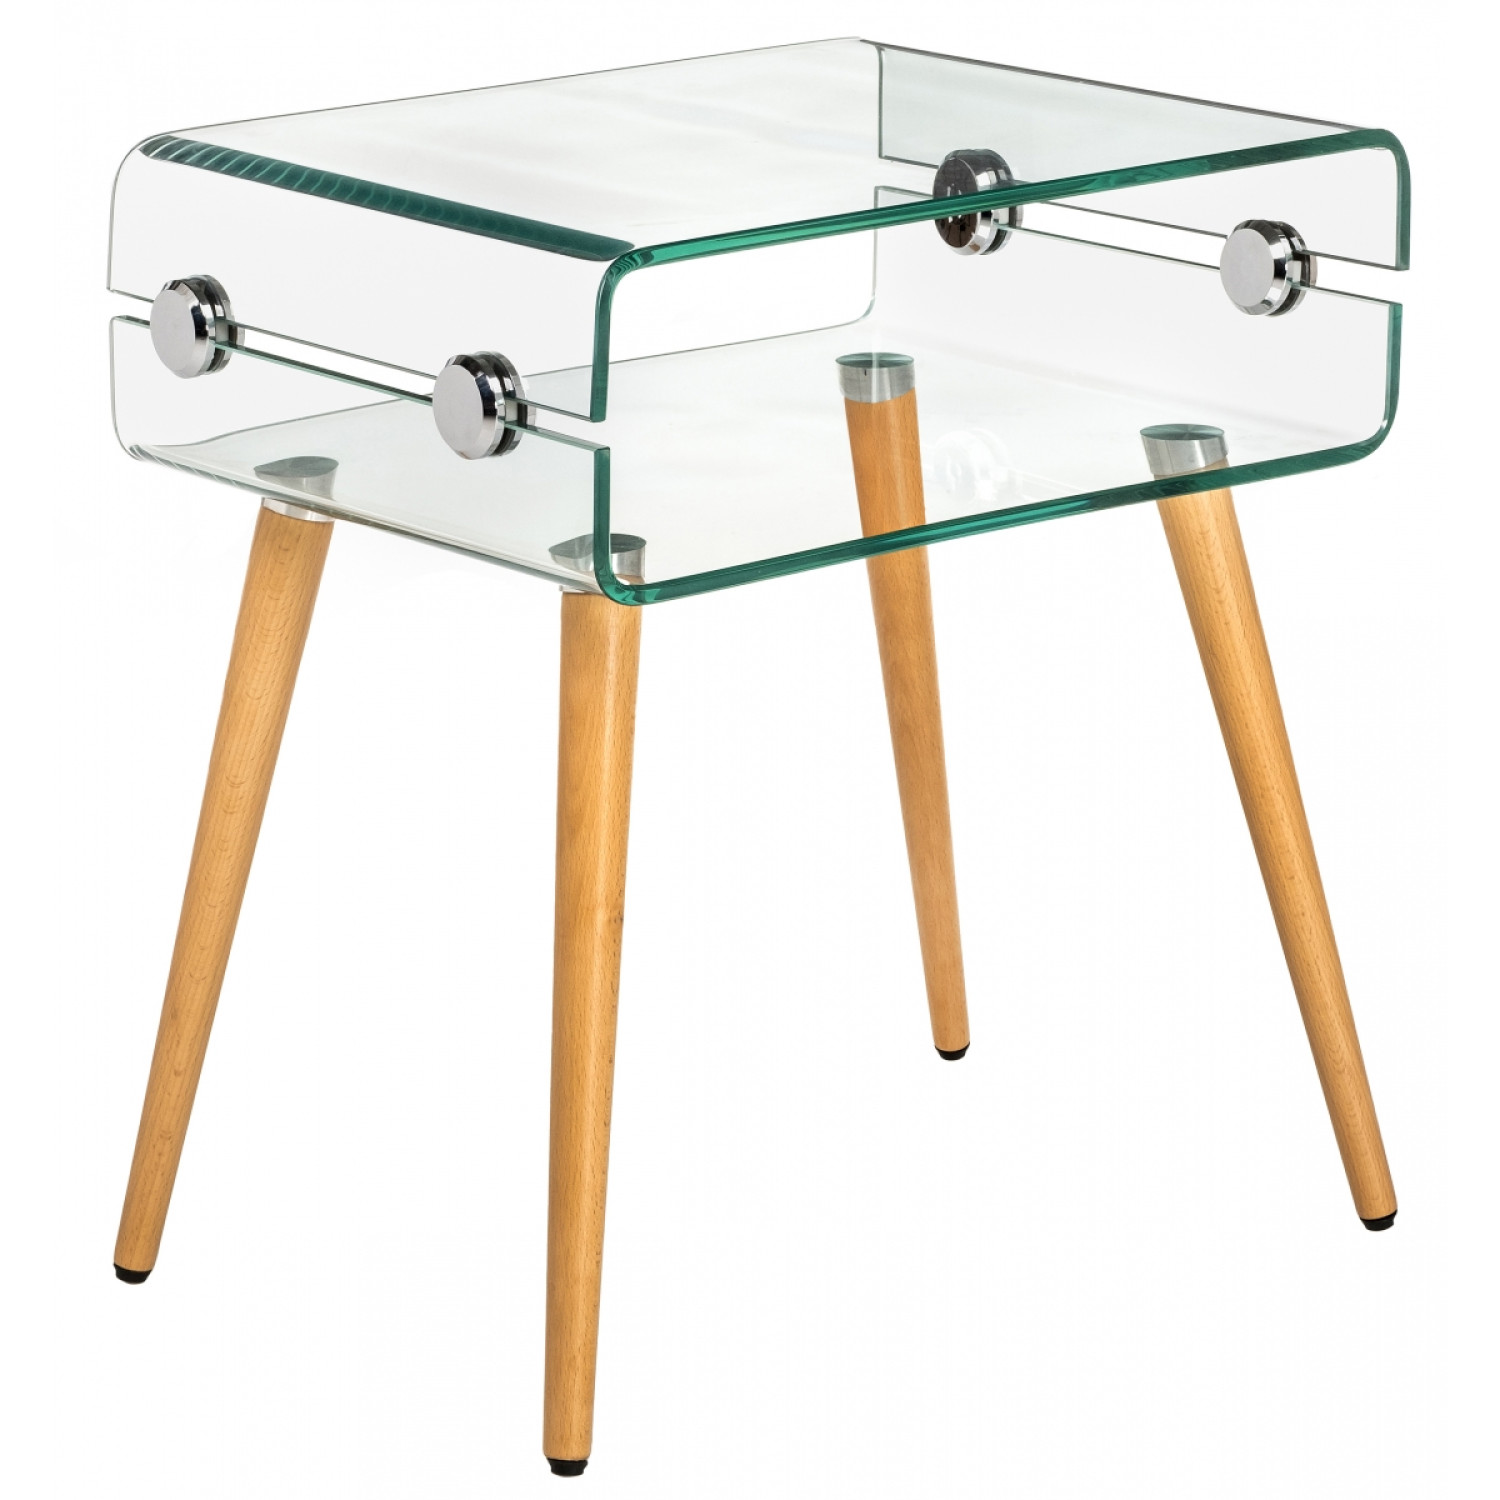 Стеклянные столы Kub фото 1 — New Style of Furniture